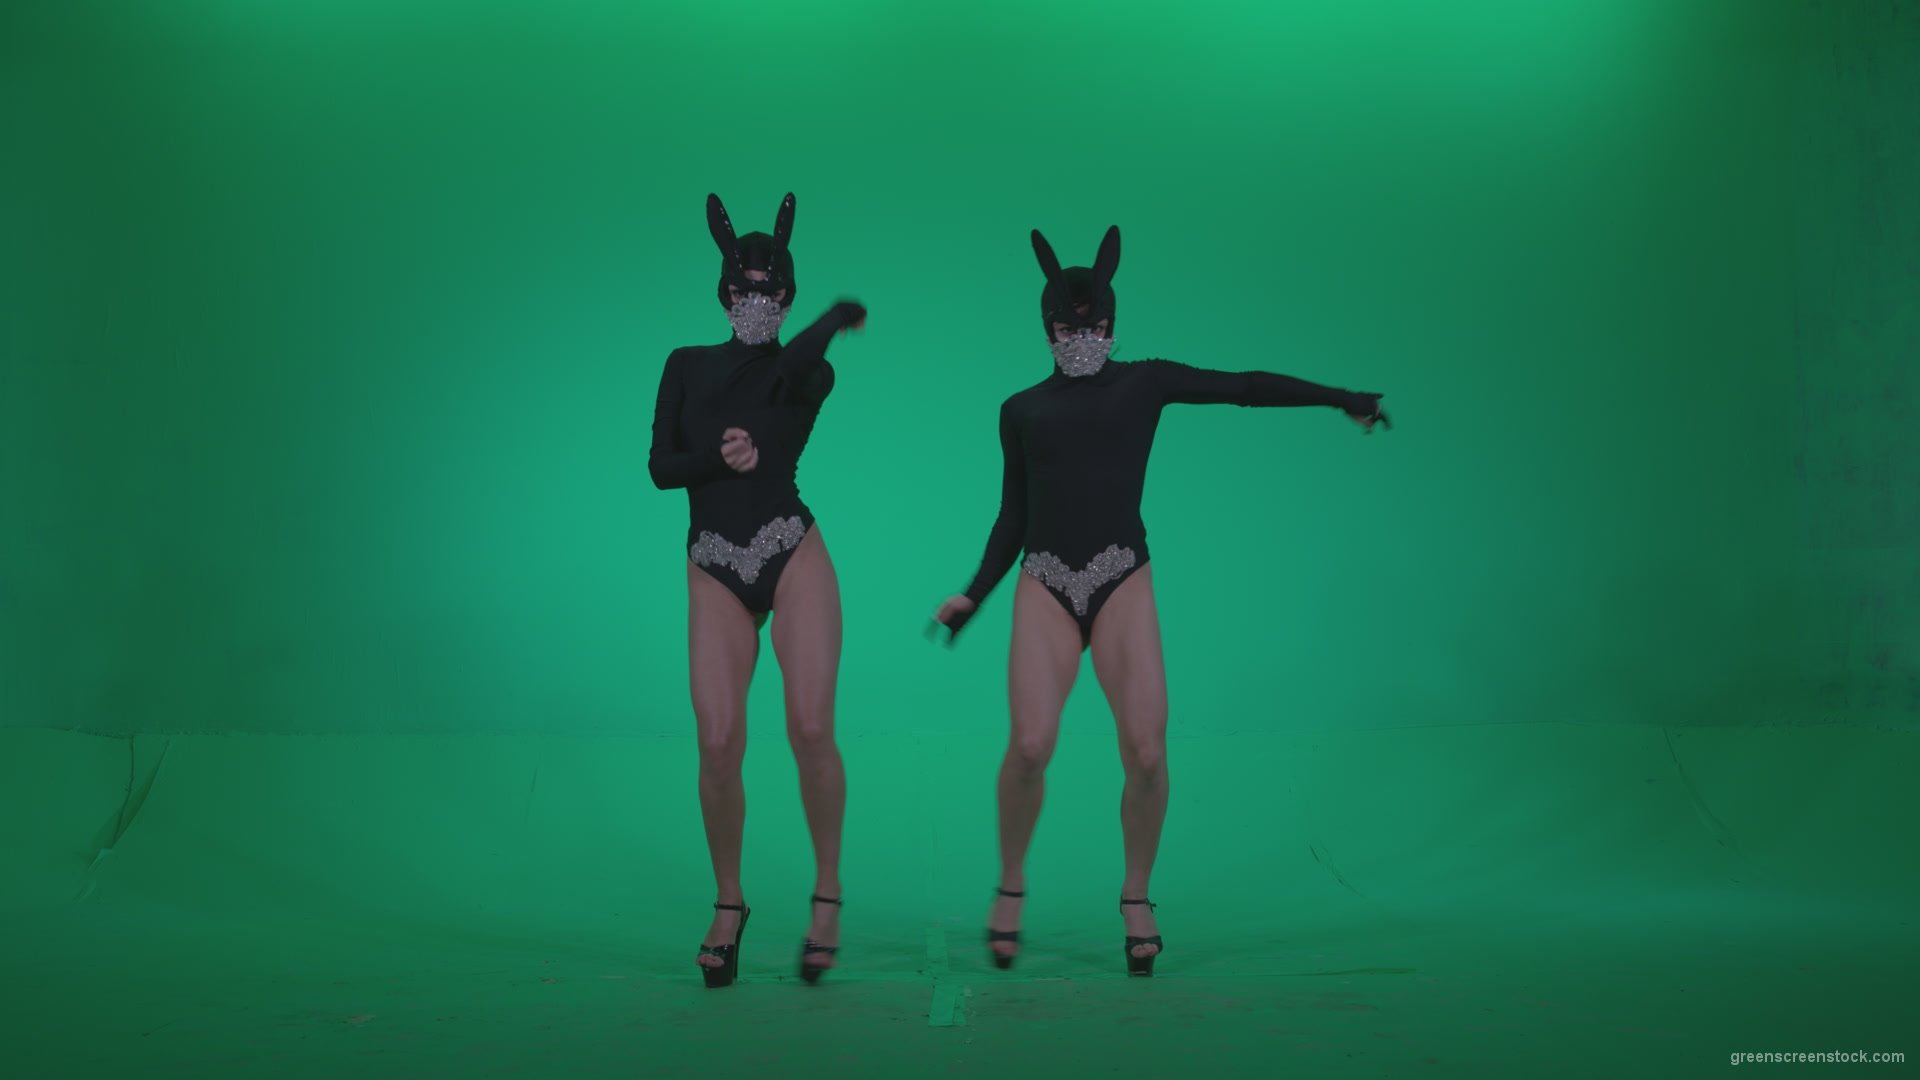 Go-go-Dancer-Black-Rabbit-u1-Green-Screen-Video-Footage_005 Green Screen Stock